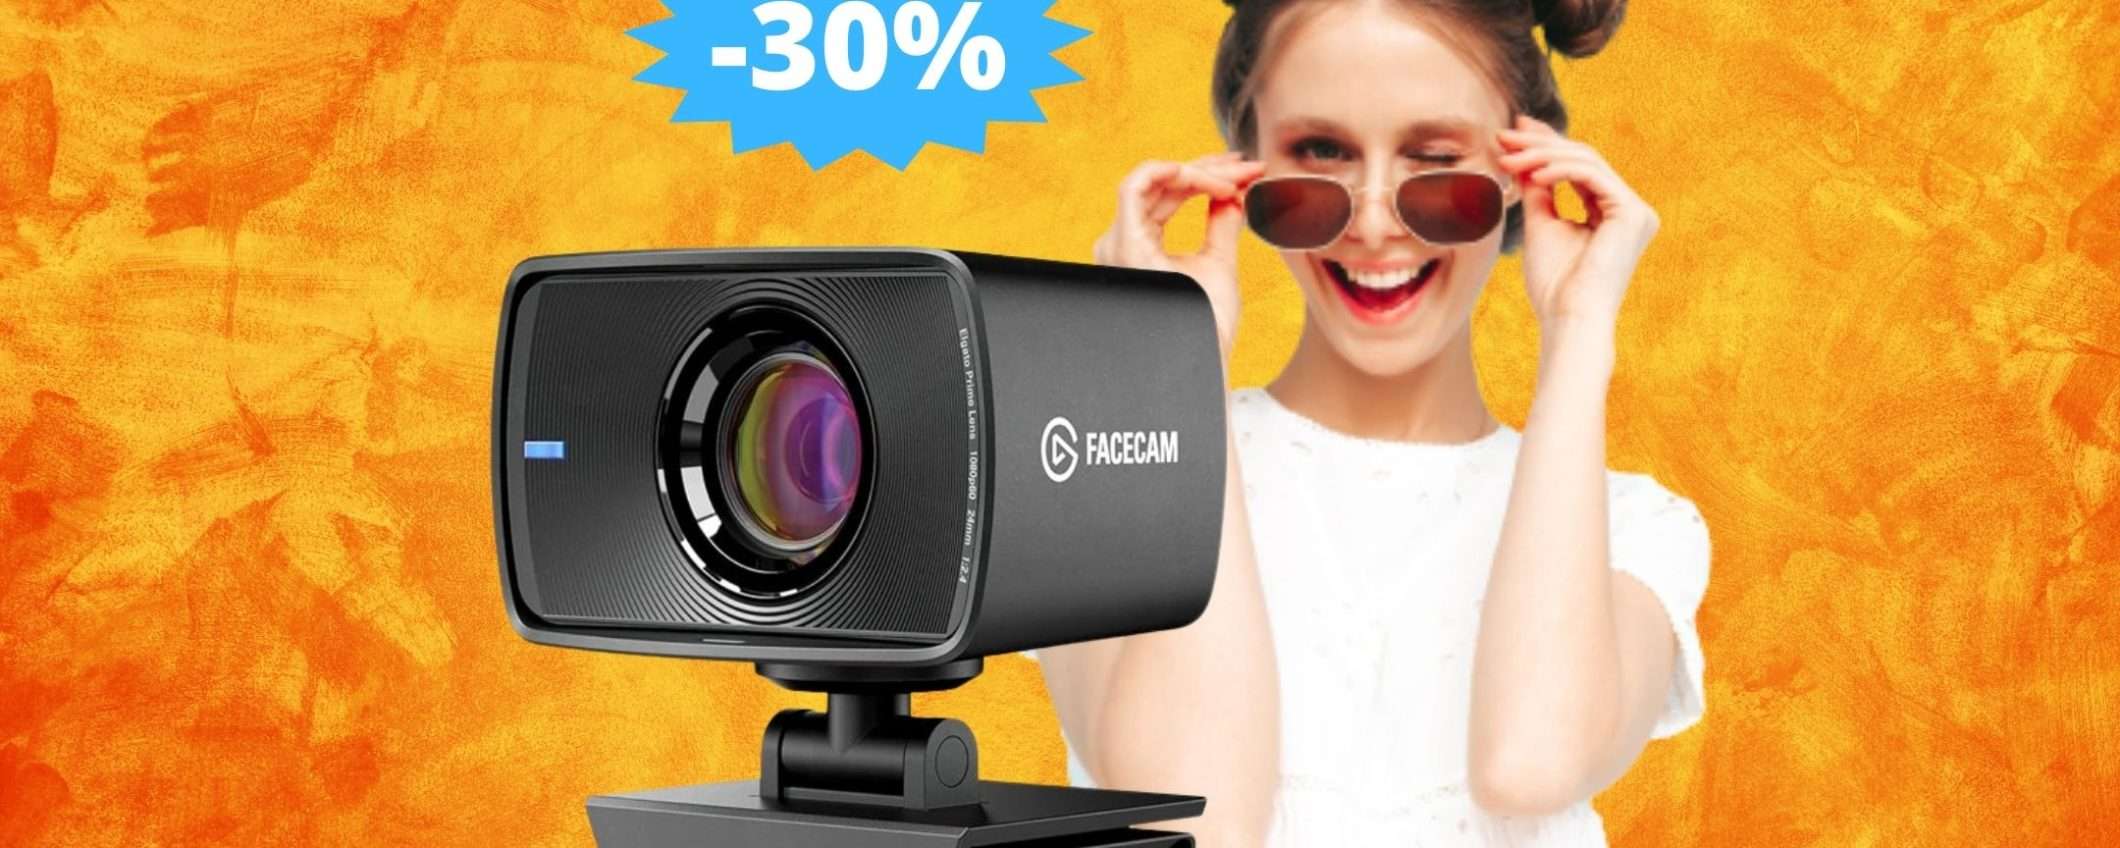 Elgato Facecam: sconto ESCLUSIVO su Amazon (-30%)